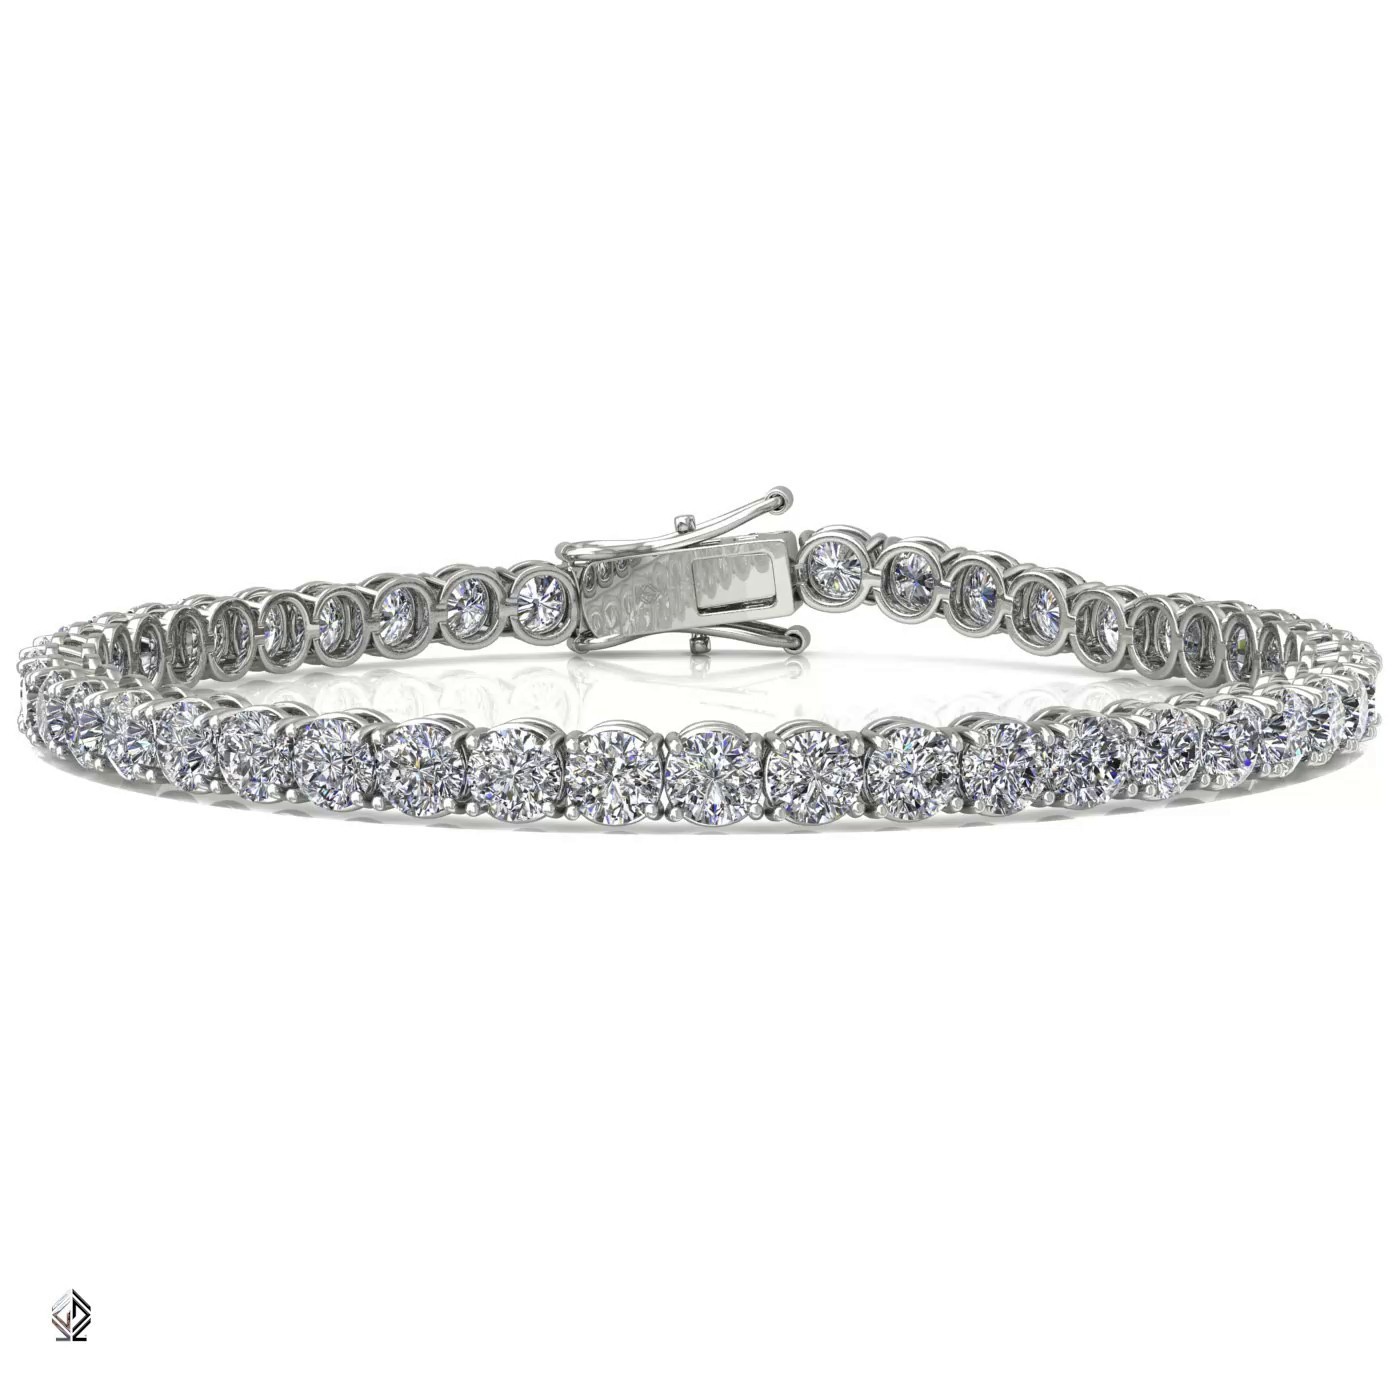 18k white gold 2.8 mm 4 prong round shape diamond tennis bracelet in round setting Photos & images